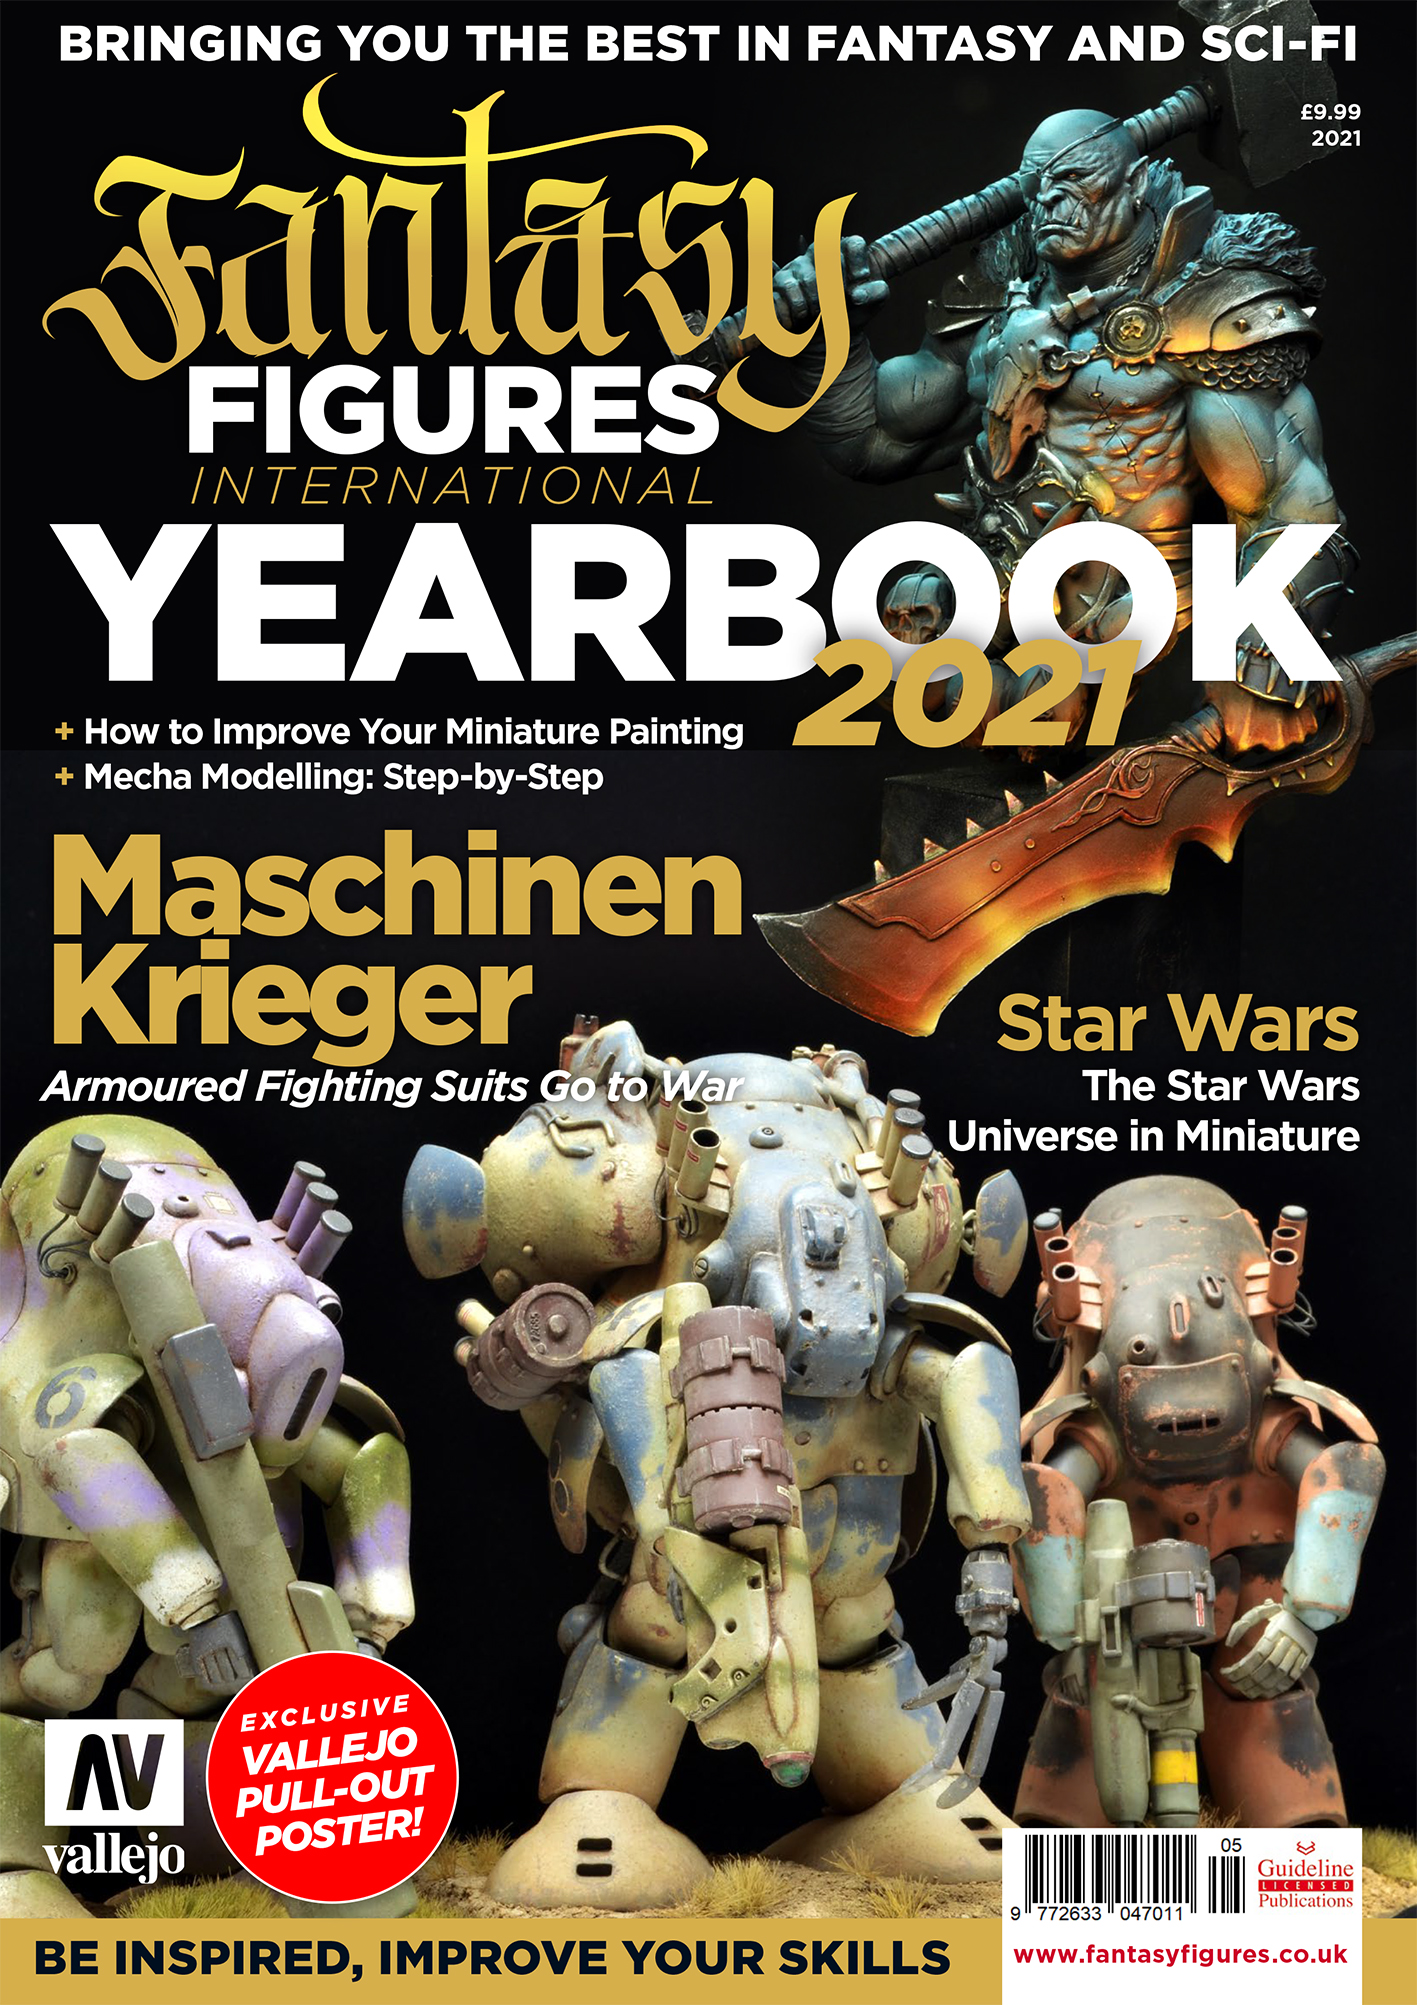 Guideline Publications Fantasy Figures Yearbook 2021 Fantasy Figures Year Book 2021 